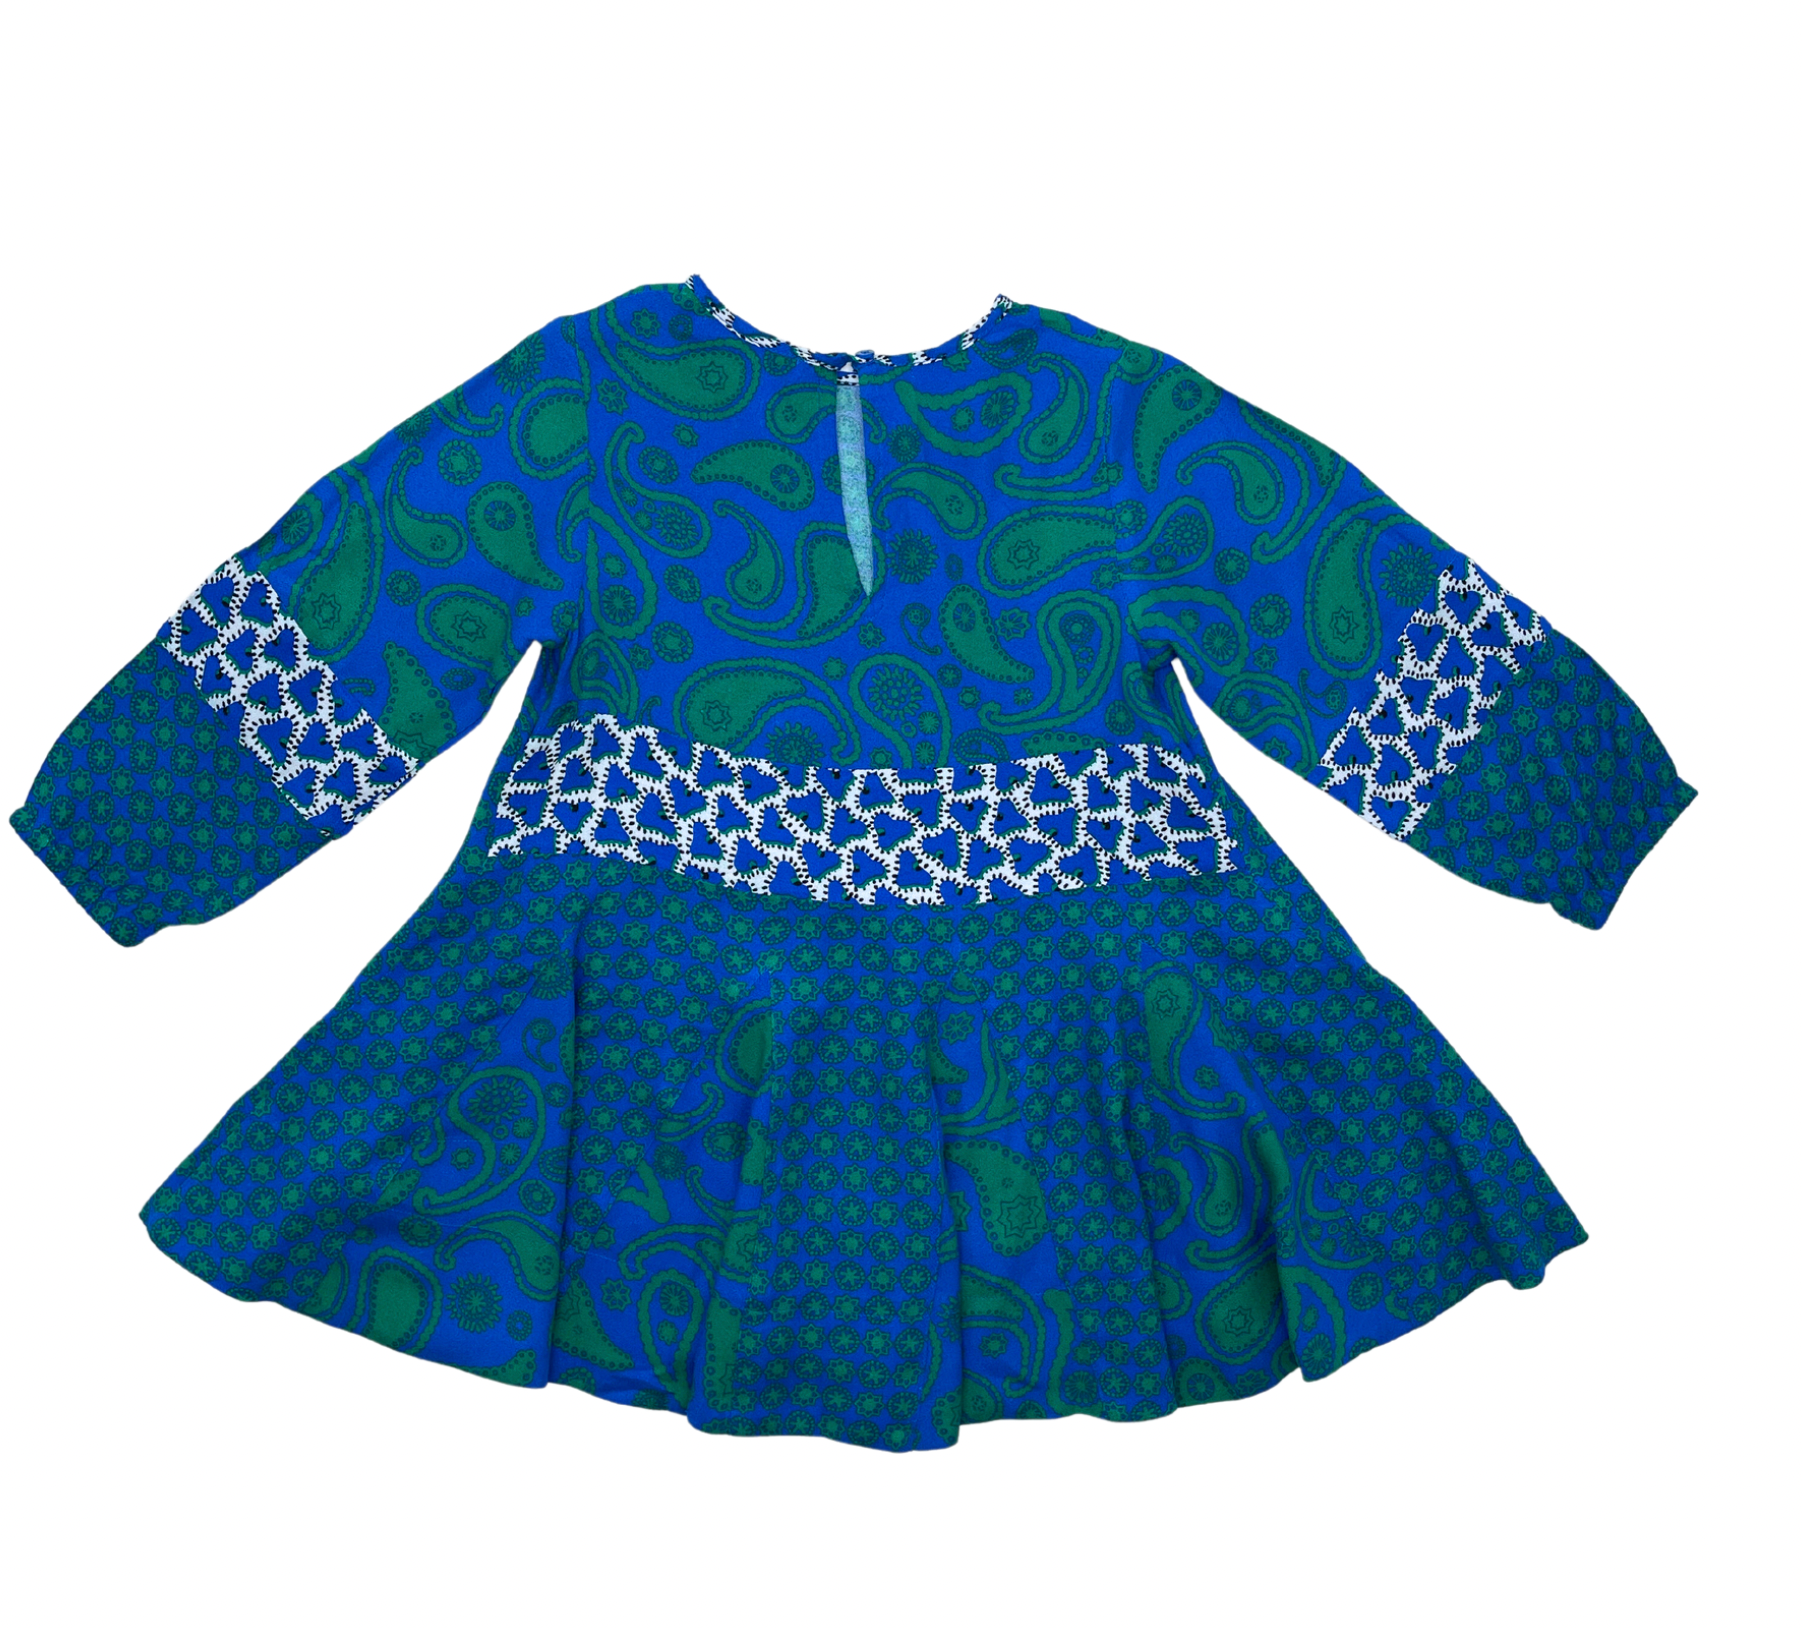 STELLA MCCARTNEY - Robe bleu et verte - 2 ans